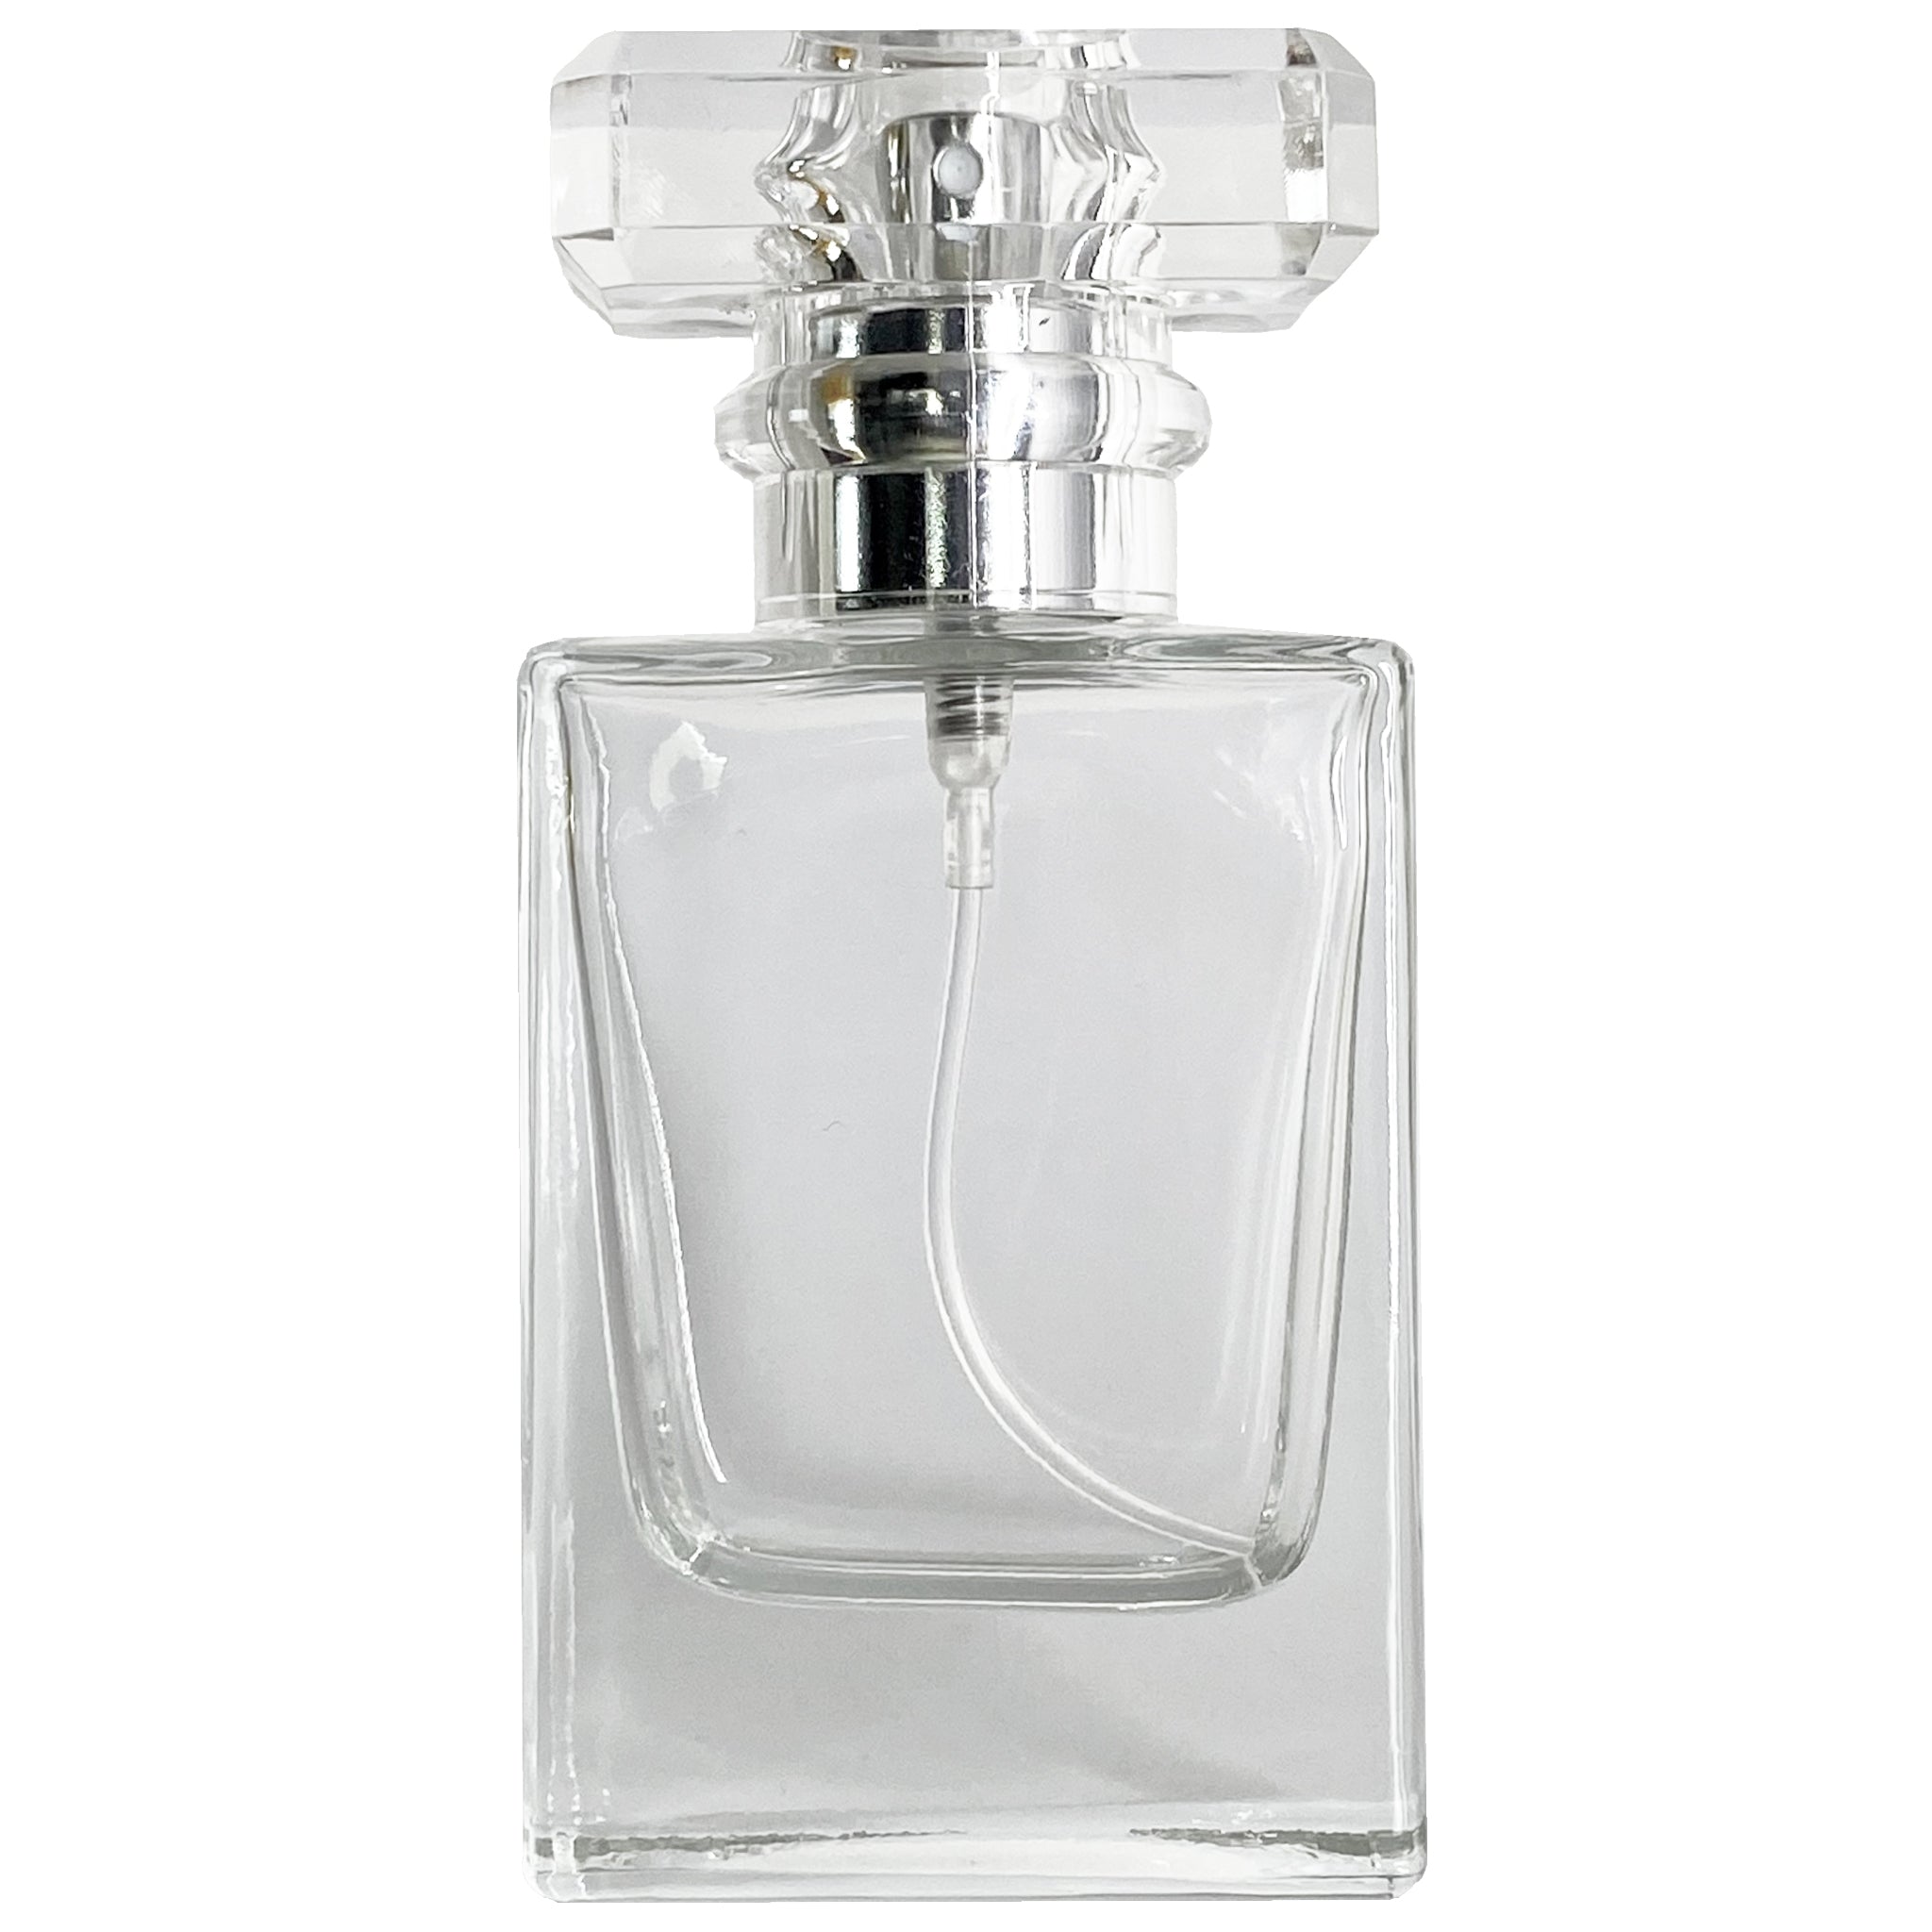 Black Square Perfume Bottle, 30ml Perfume Bottle